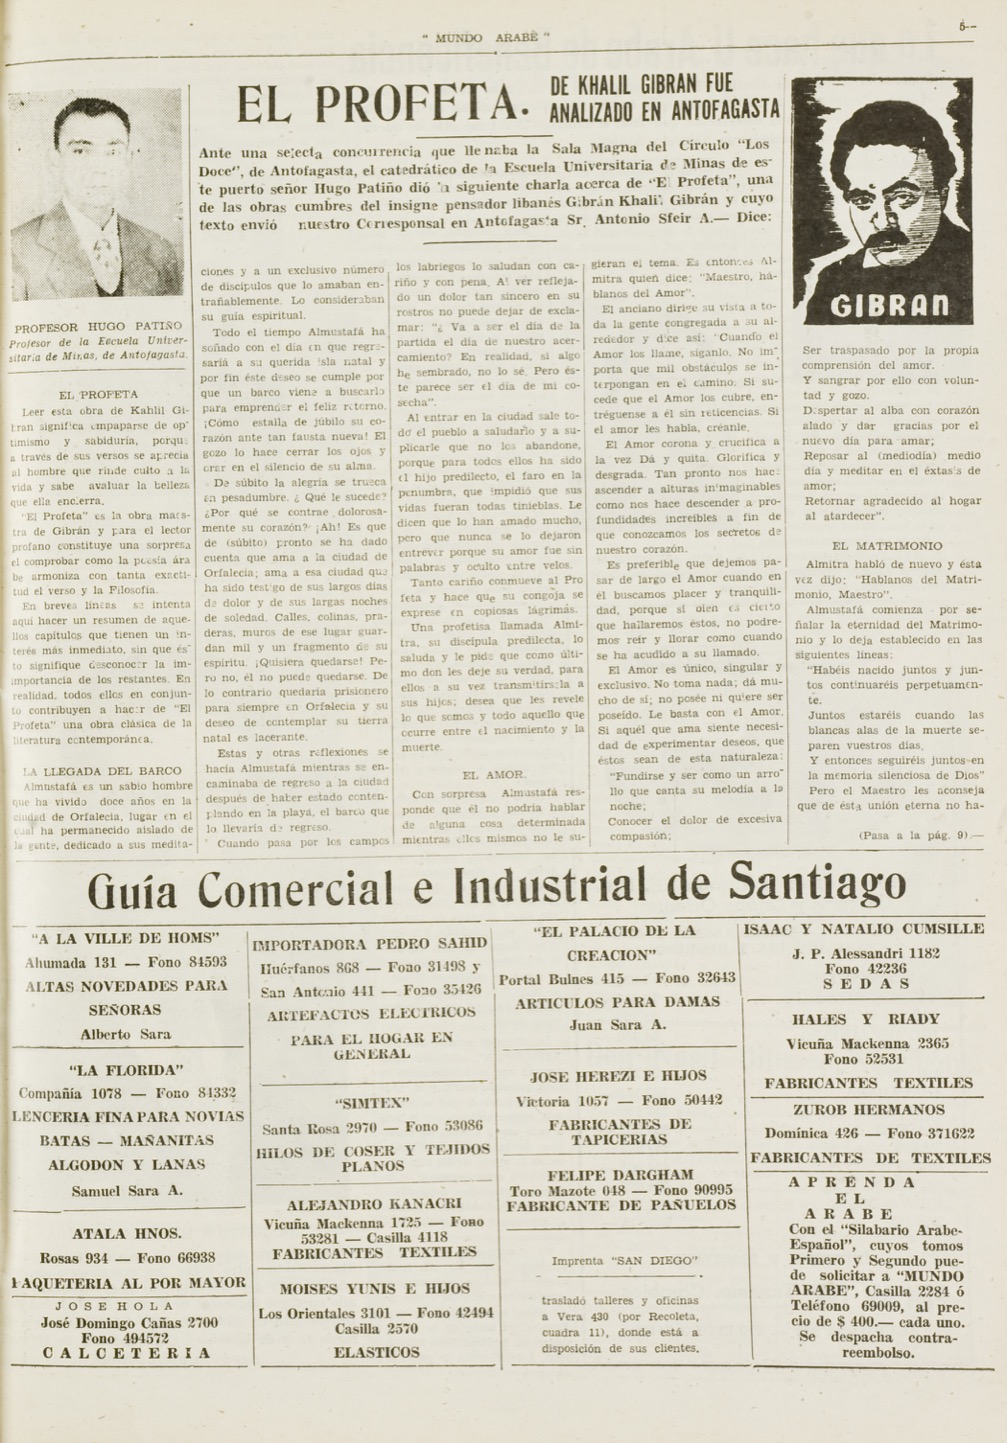 "El Profeta de Khalil Gibrán fue analizado en Antofagasta", Mundo Árabe, Jun 30, 1955, pp. 5,8.